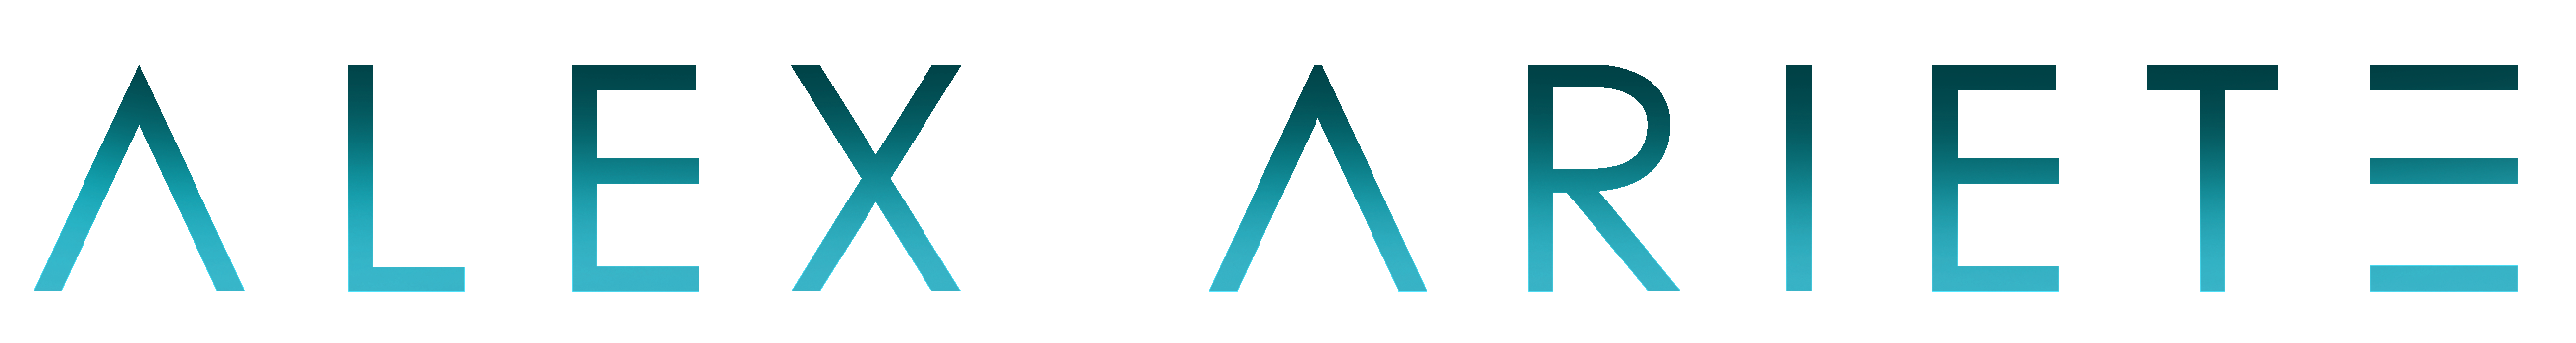 Alex Ariete logo